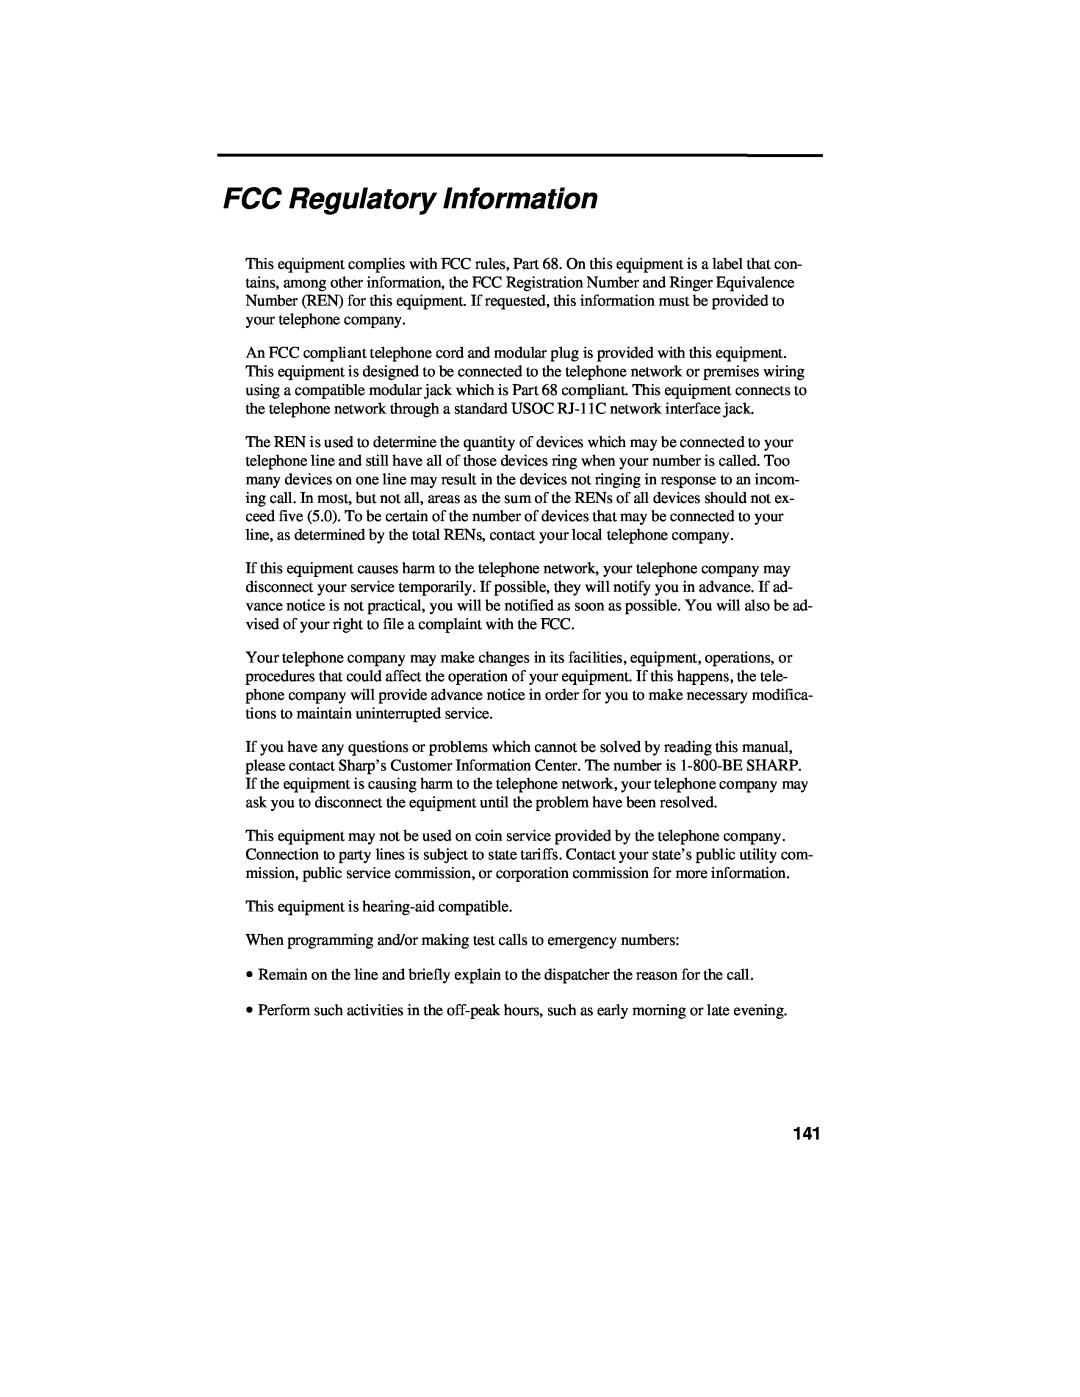 Sharp UX-460 operation manual FCC Regulatory Information 